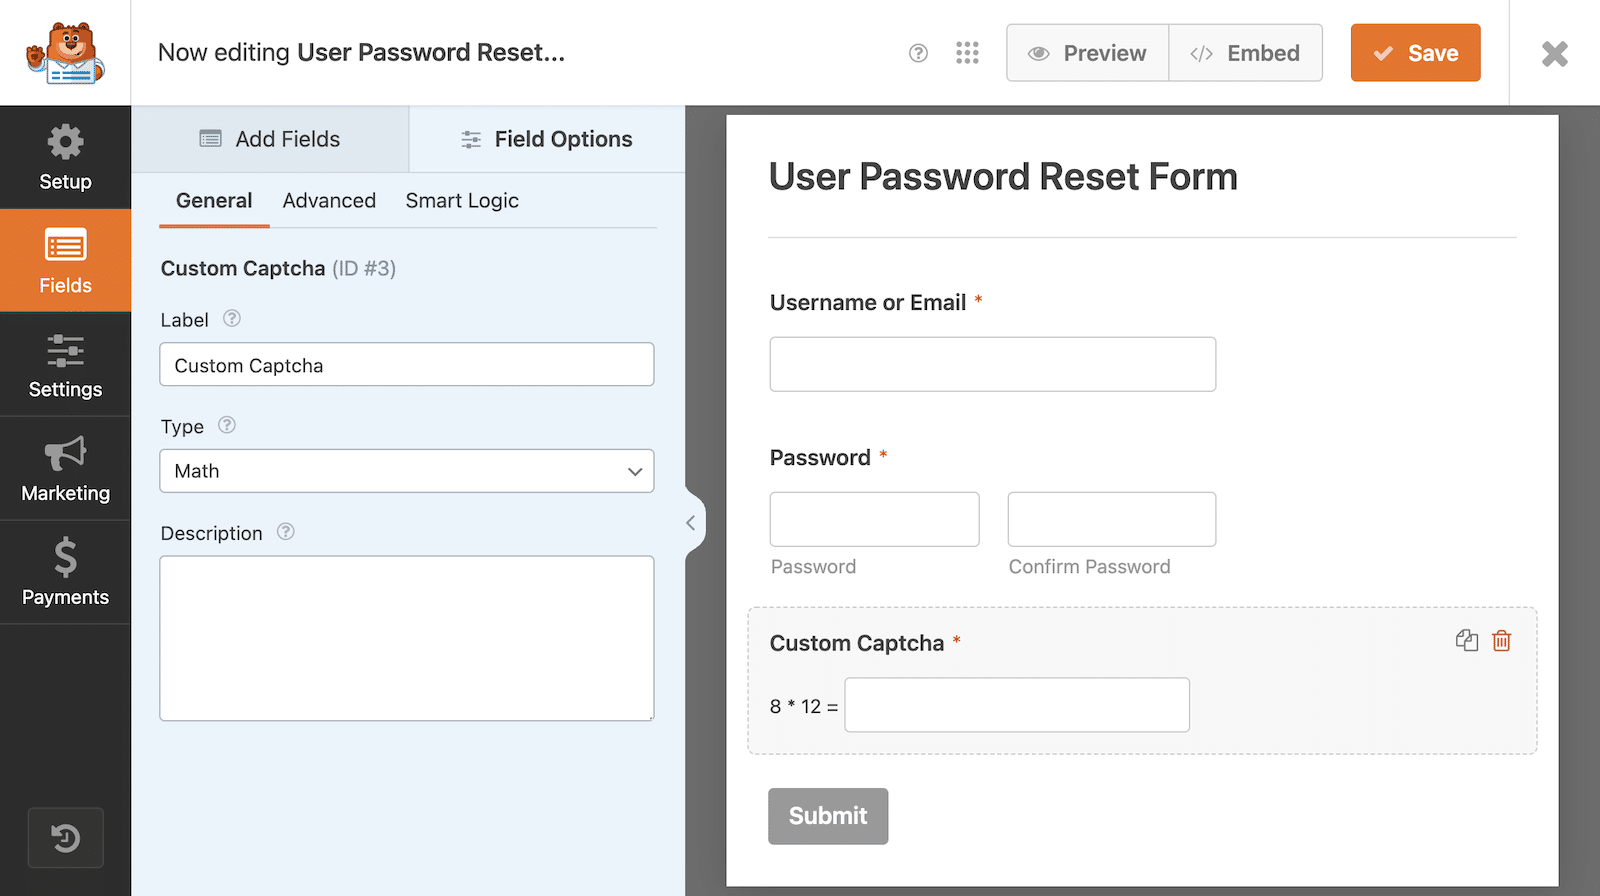 Use a Custom Captcha to preent unauthorized WordPress password resets 